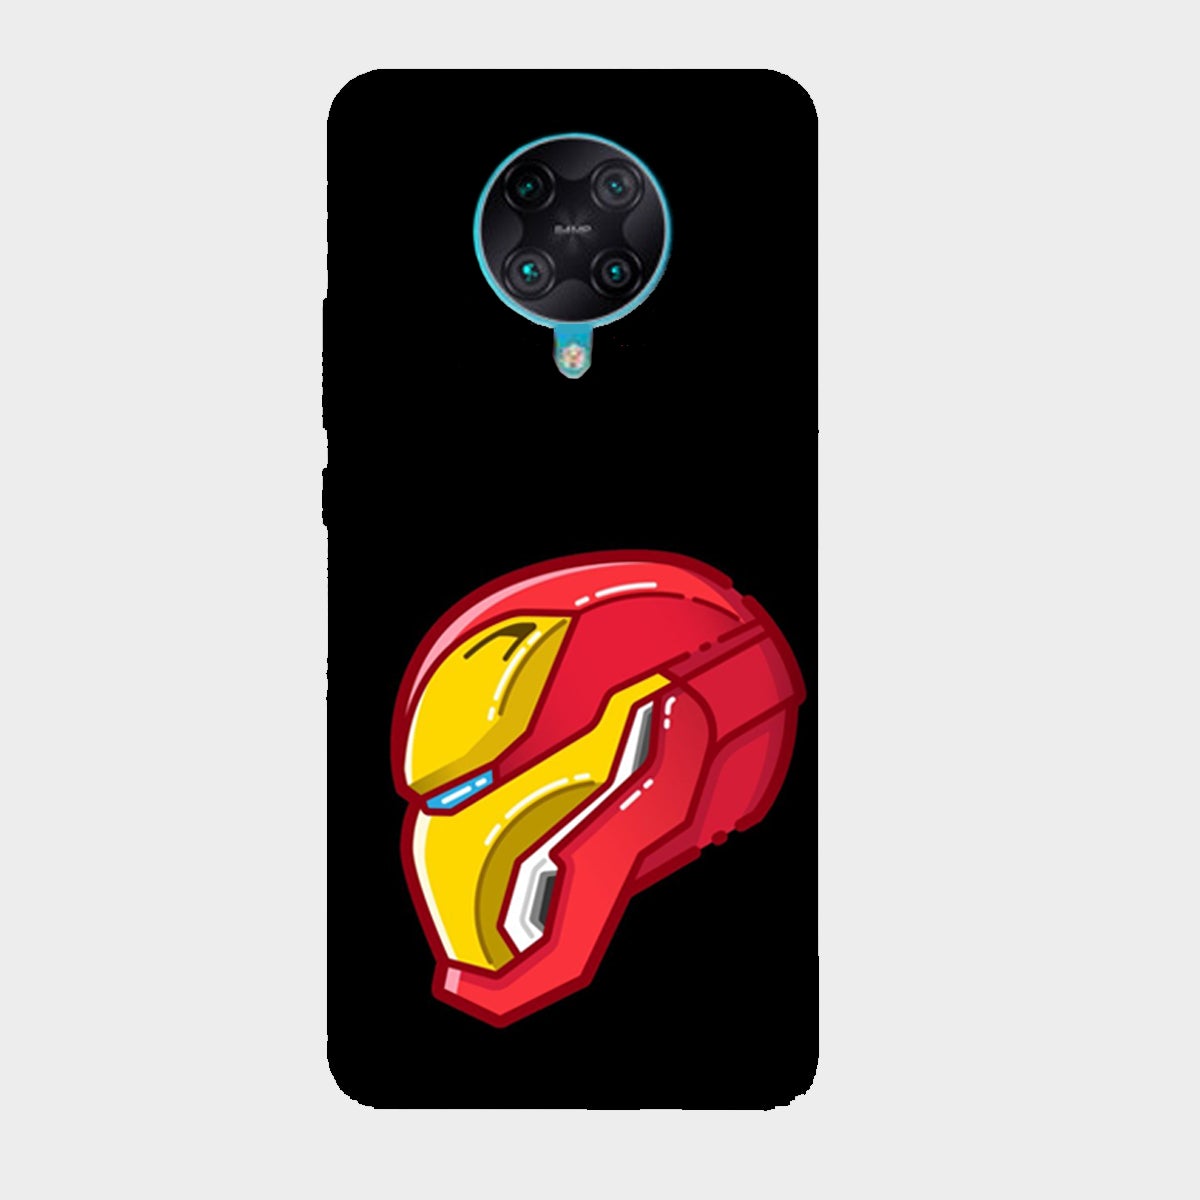 Iron Man - Art - Mobile Phone Cover - Hard Case